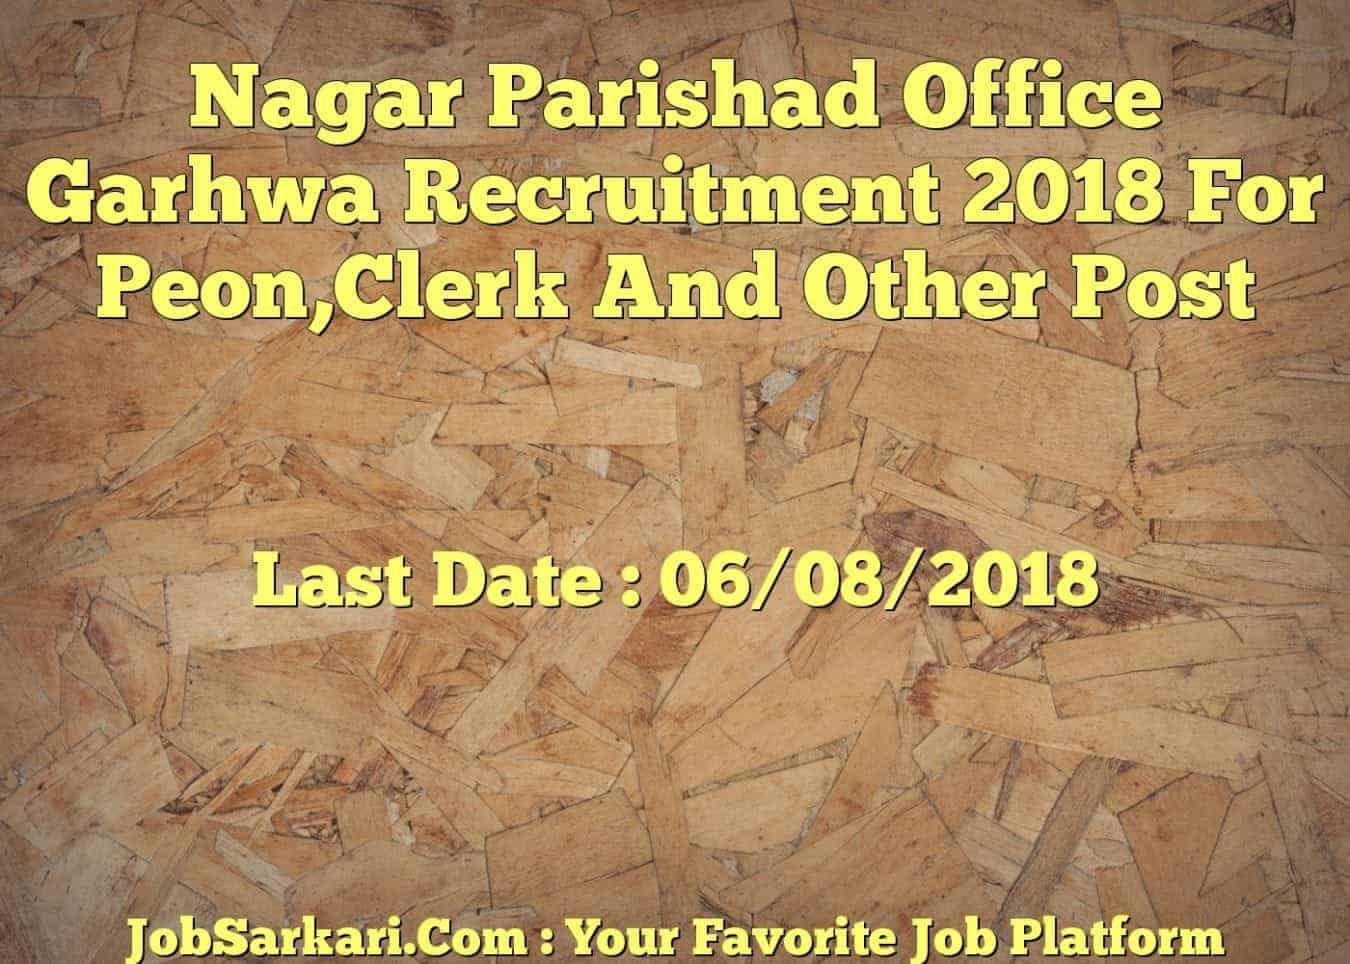 Nagar Parishad Office Garhwa Recruitment 2018 For Peon,Clerk And Other Post